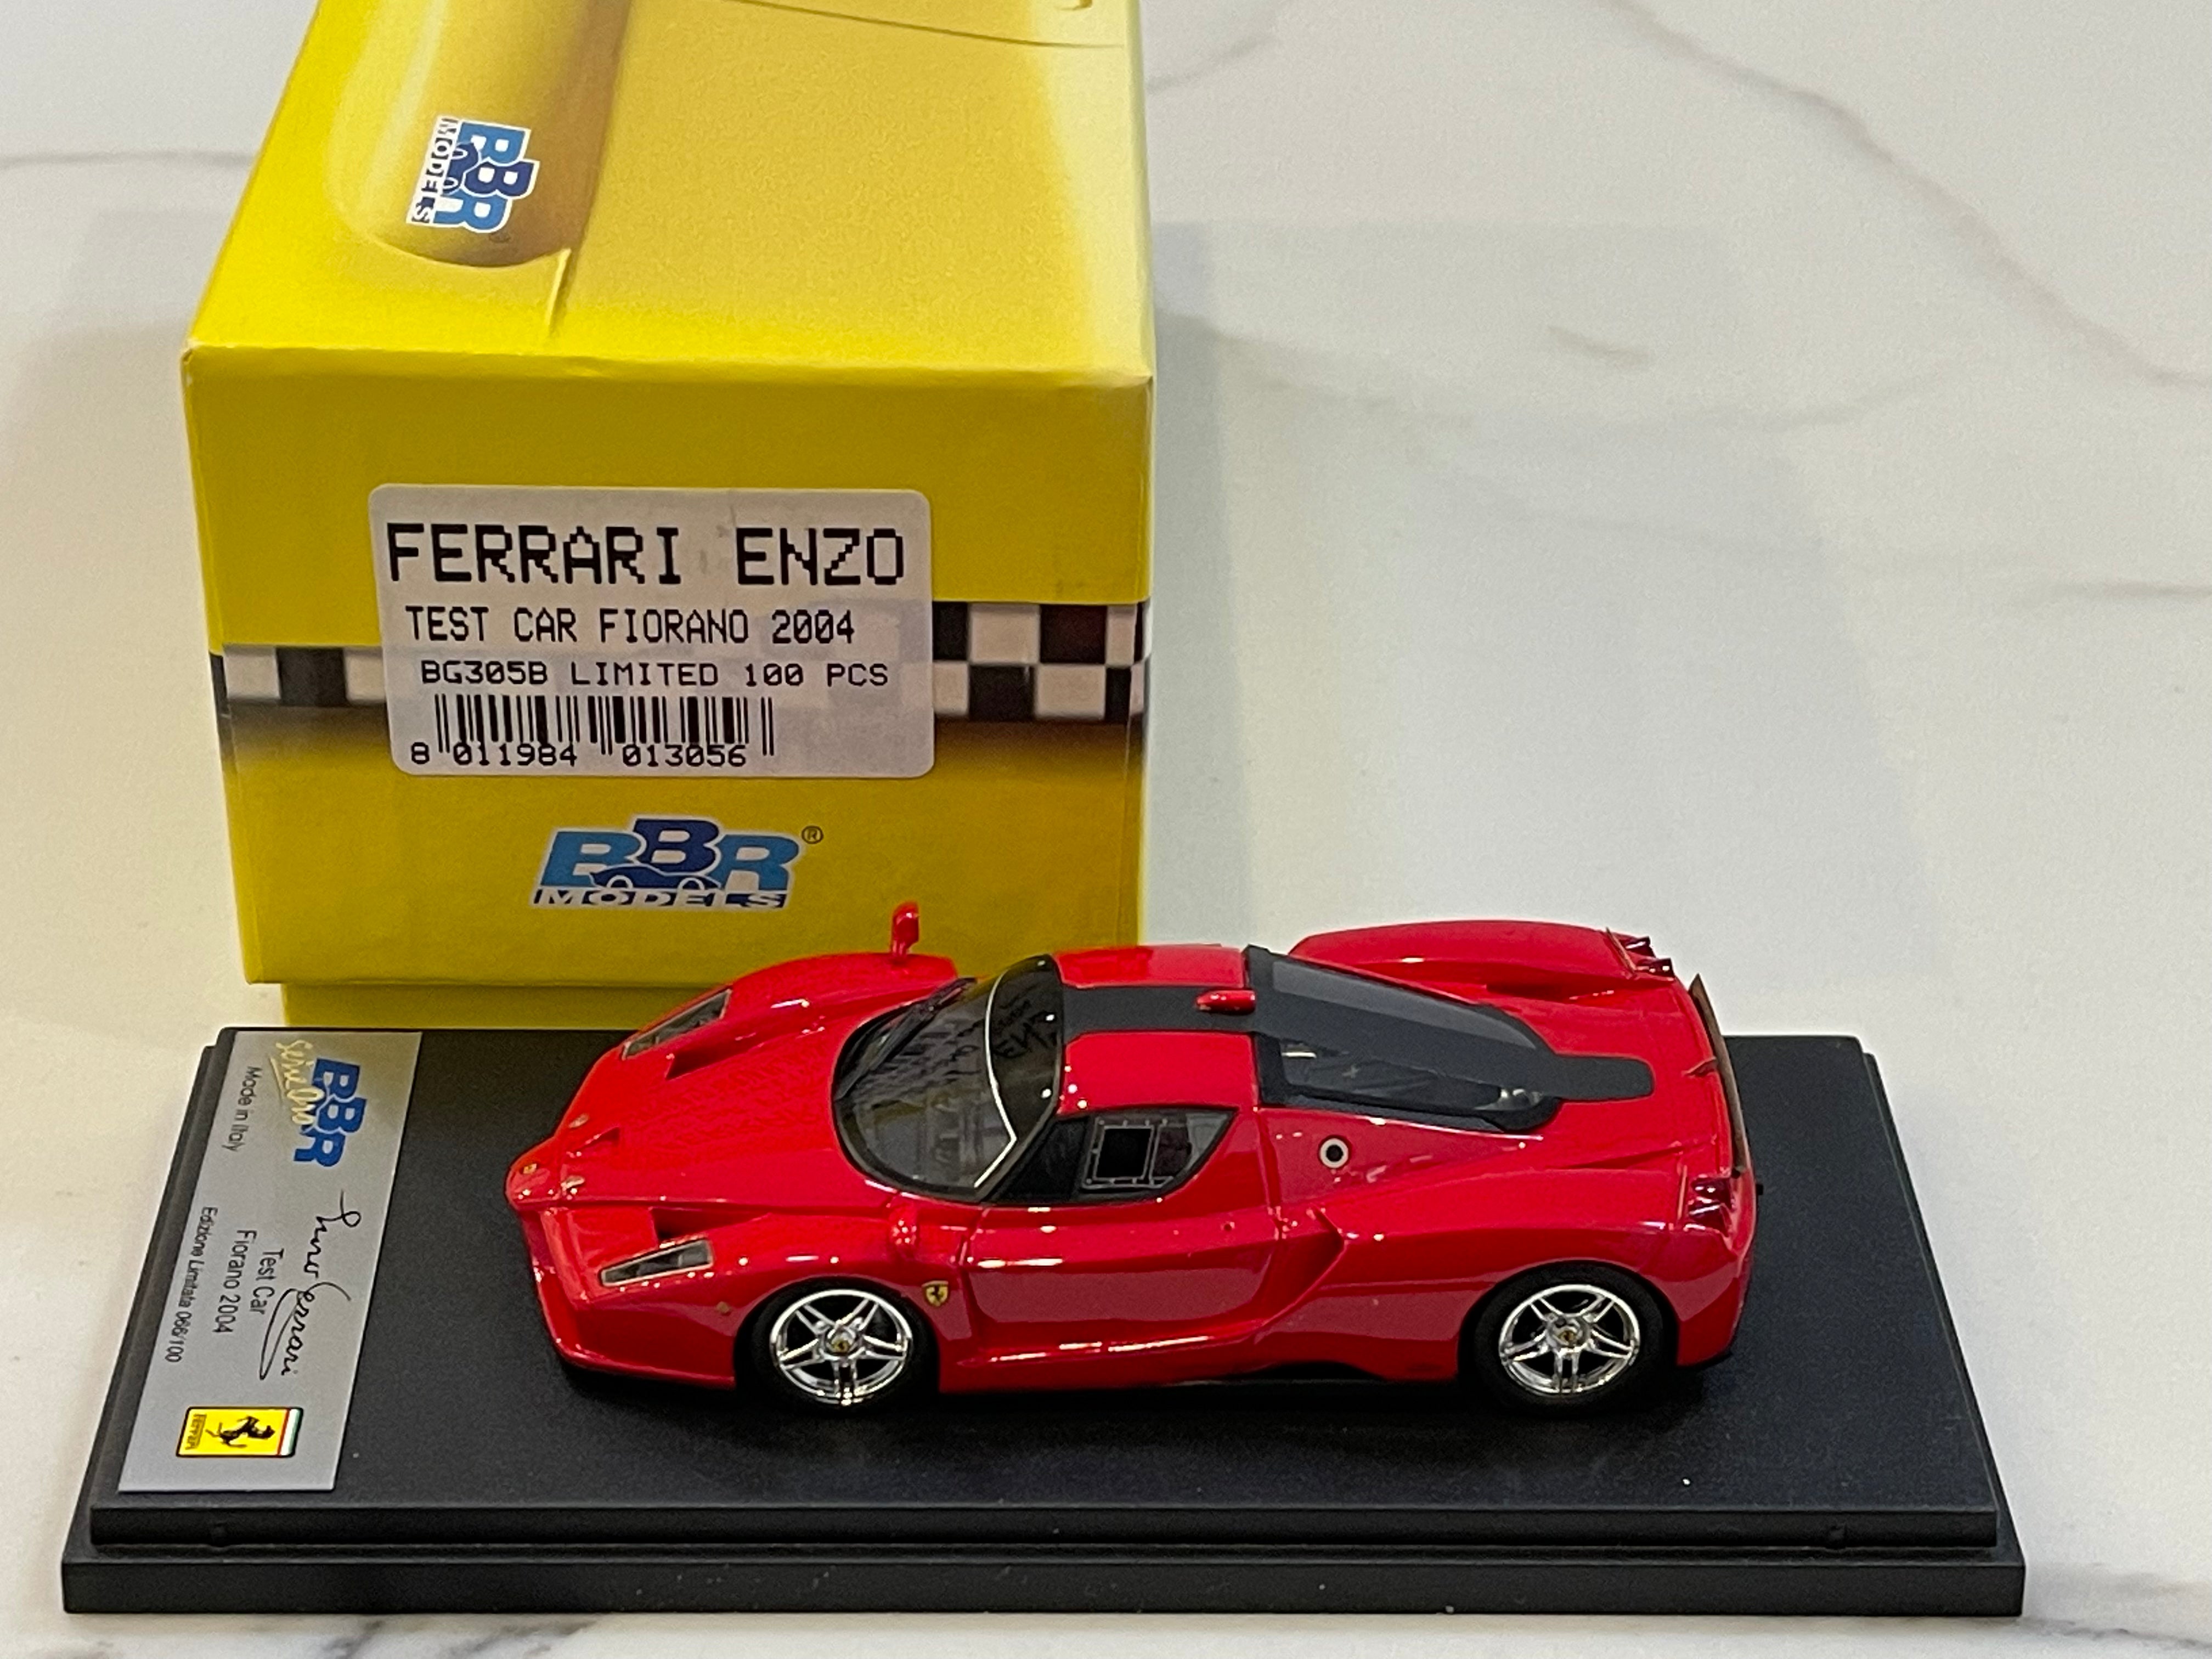 BBR 1/43 Ferrari Enzo Test Fiorano 2004 Red BG305B